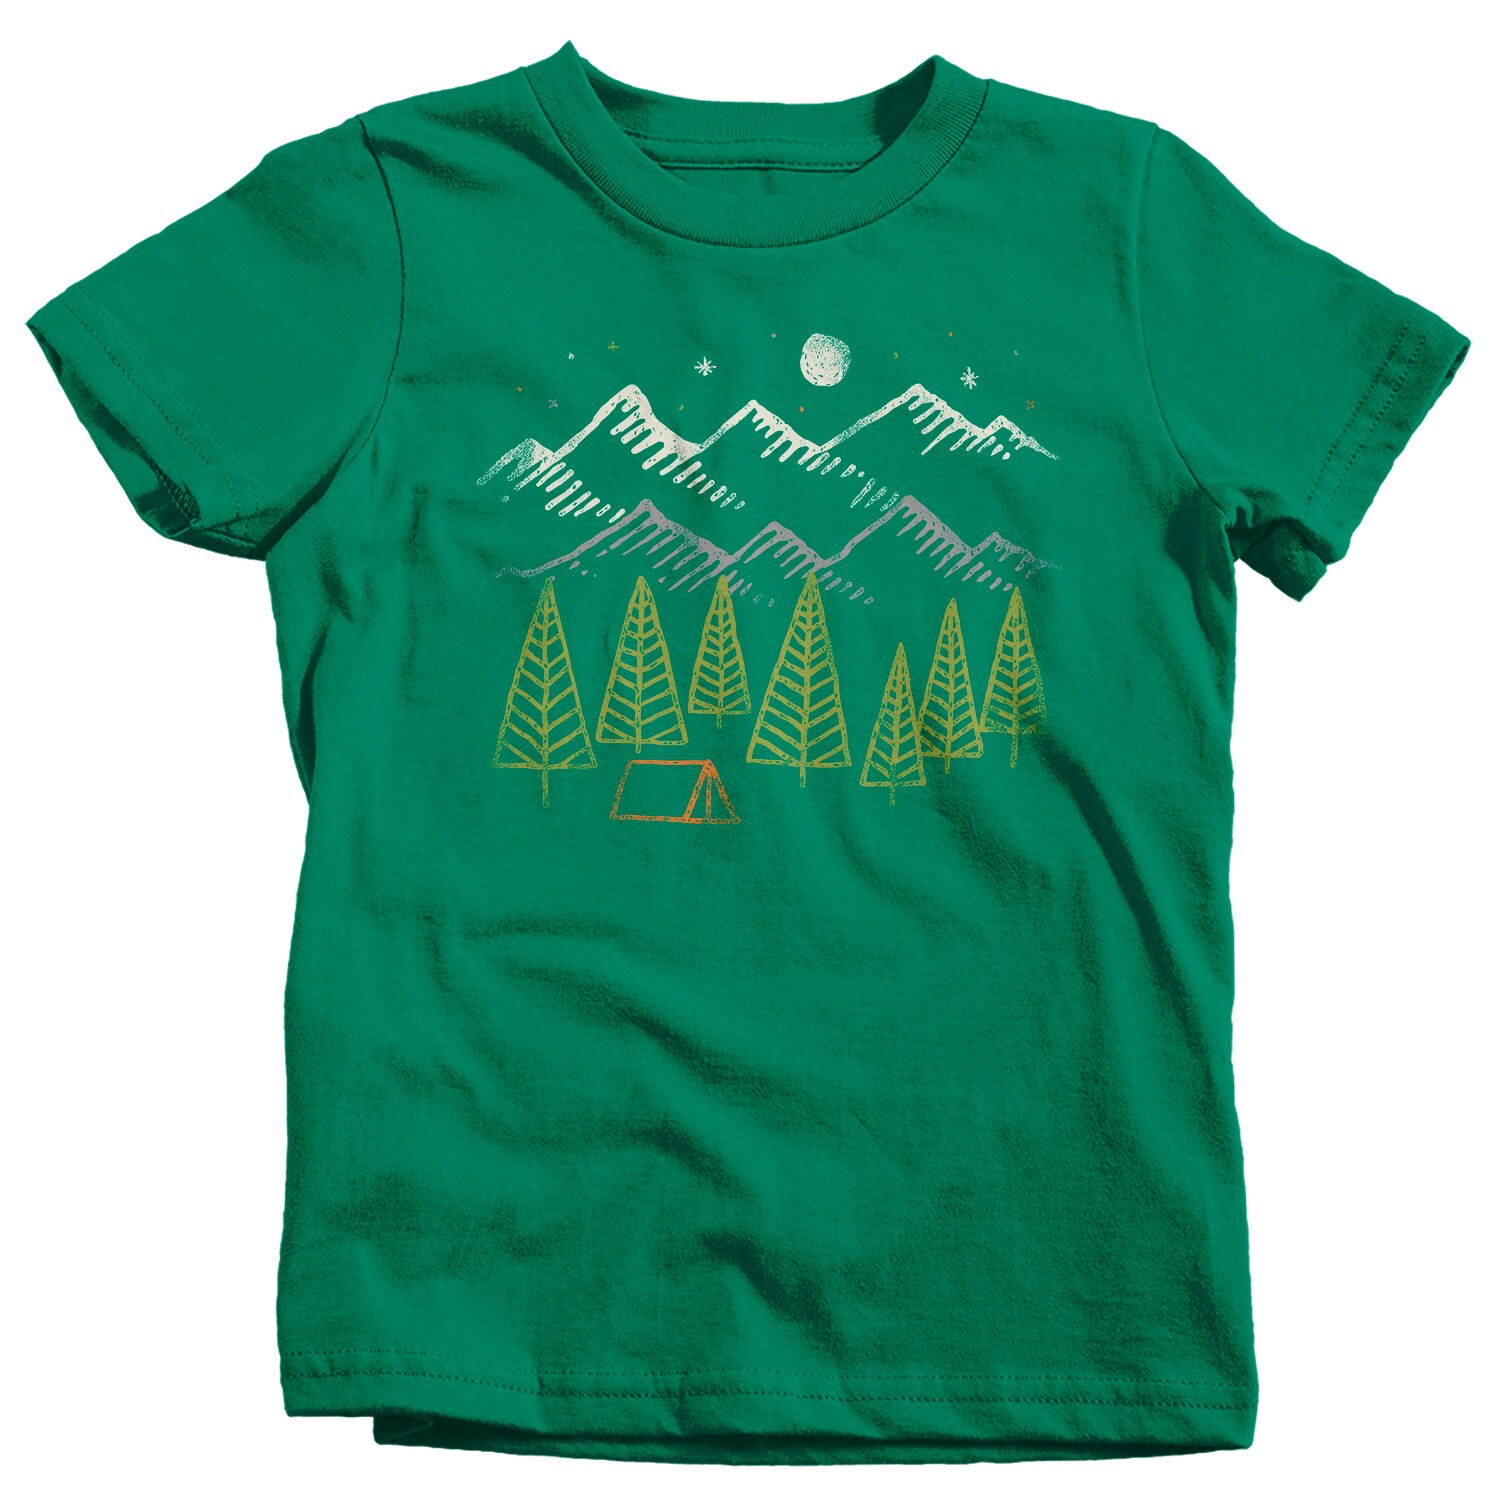 Kids Camping T Shirt Hipster Shirt Camp Shirts Camp Tent | Etsy